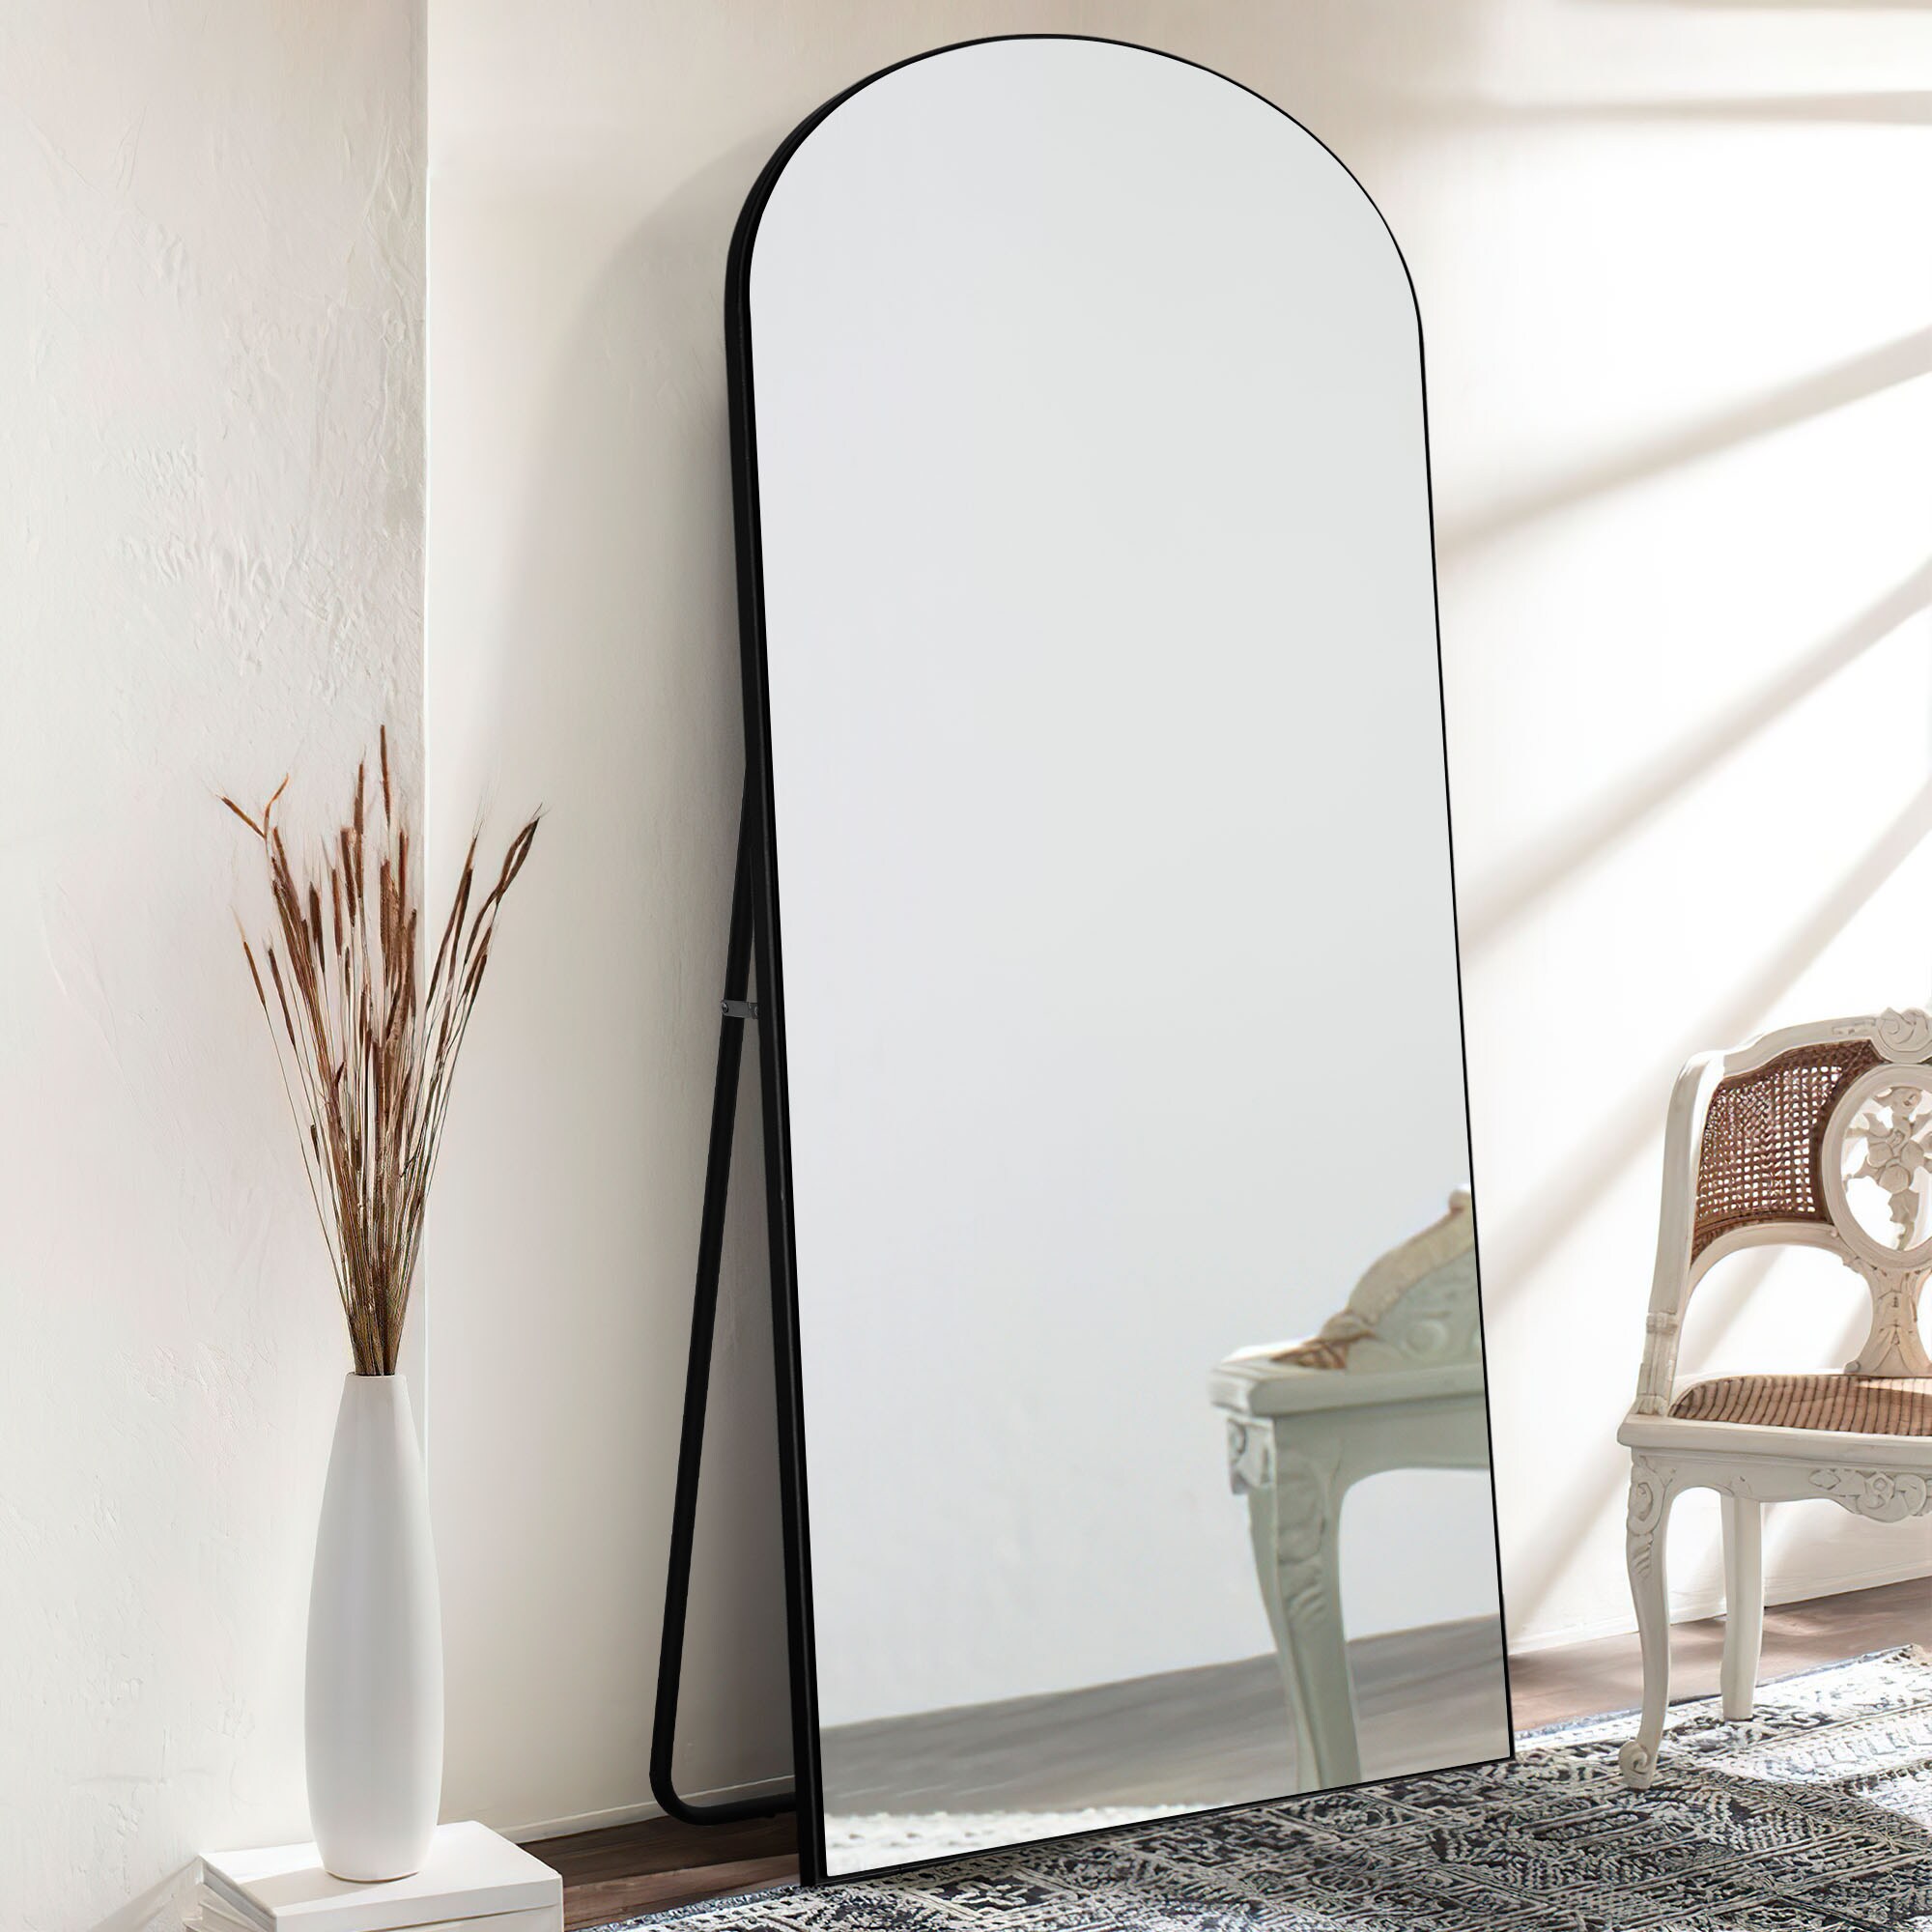 NeuType 29-in W x 68-in H Arch Gold Framed Full Length Floor Mirror